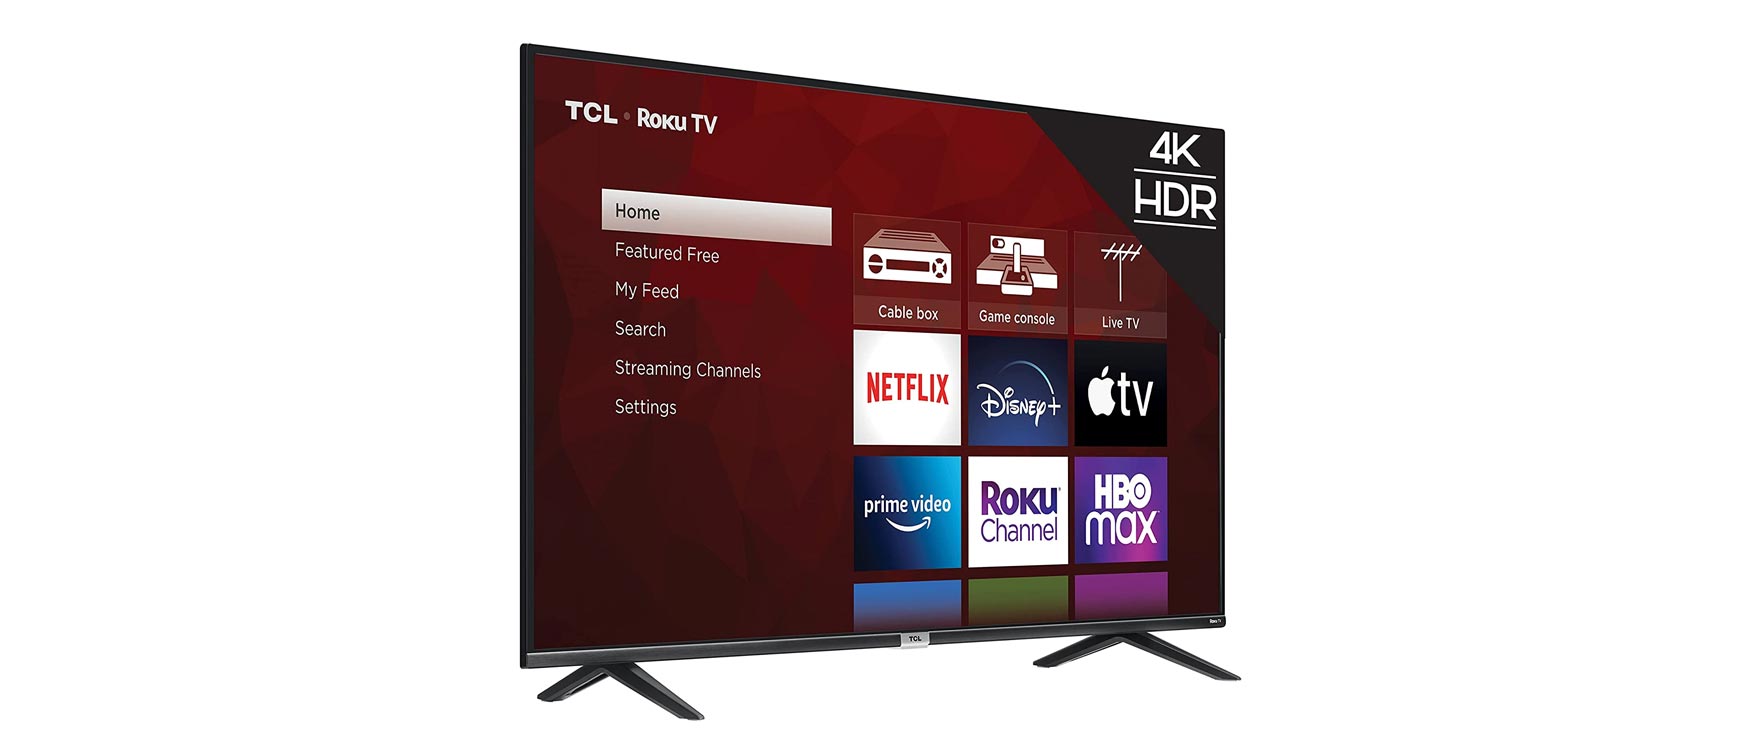 1. Best Budget Model: TCL 50S435 4K UHD TV